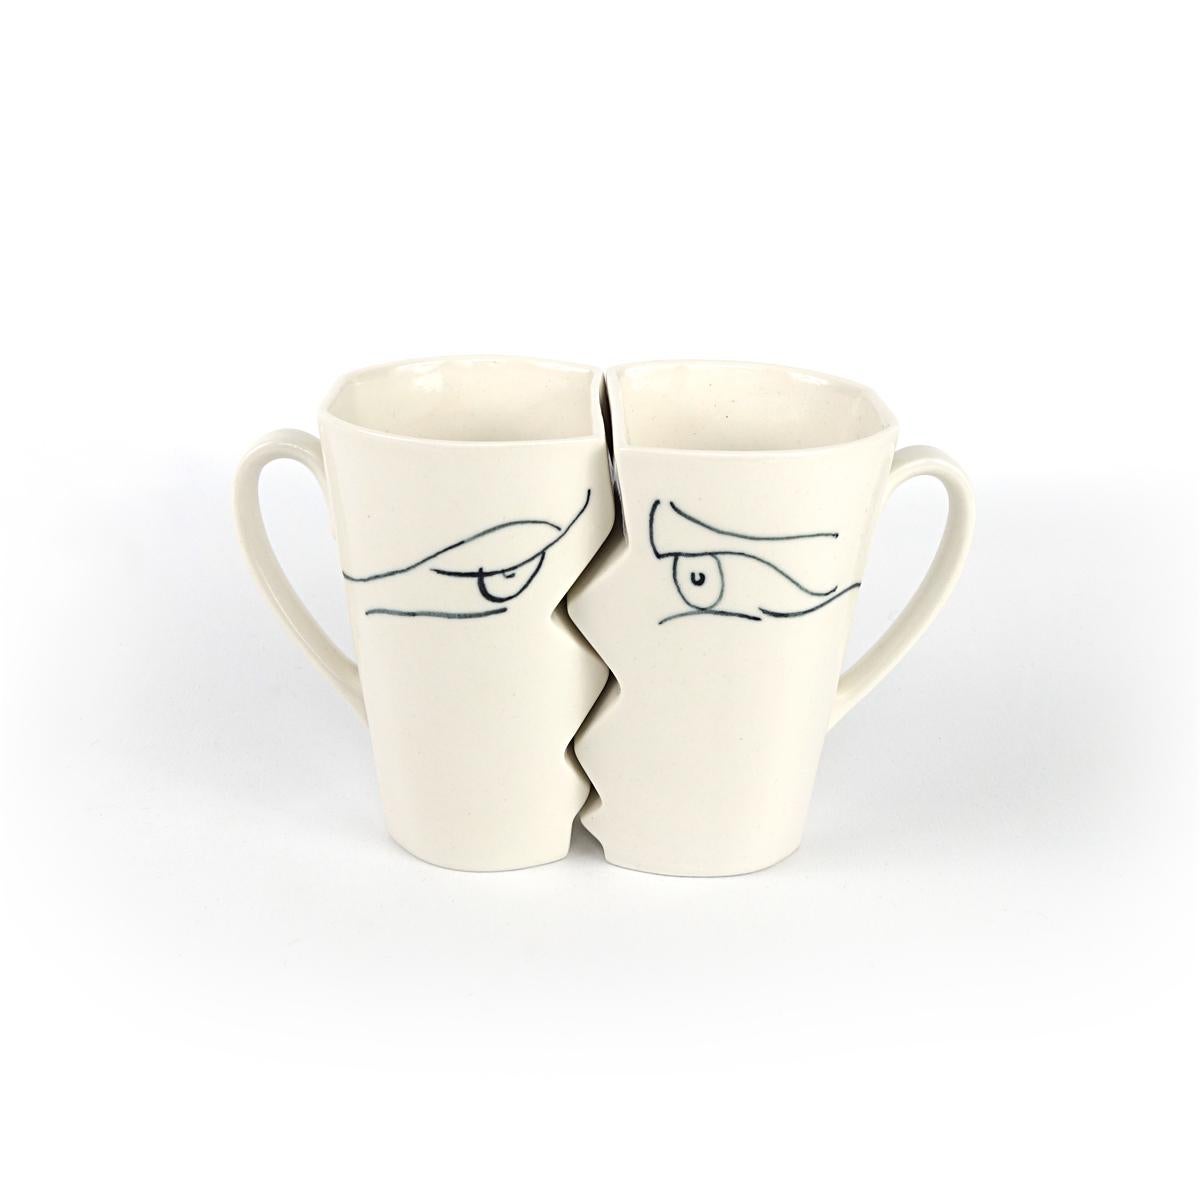 kissing mugs set